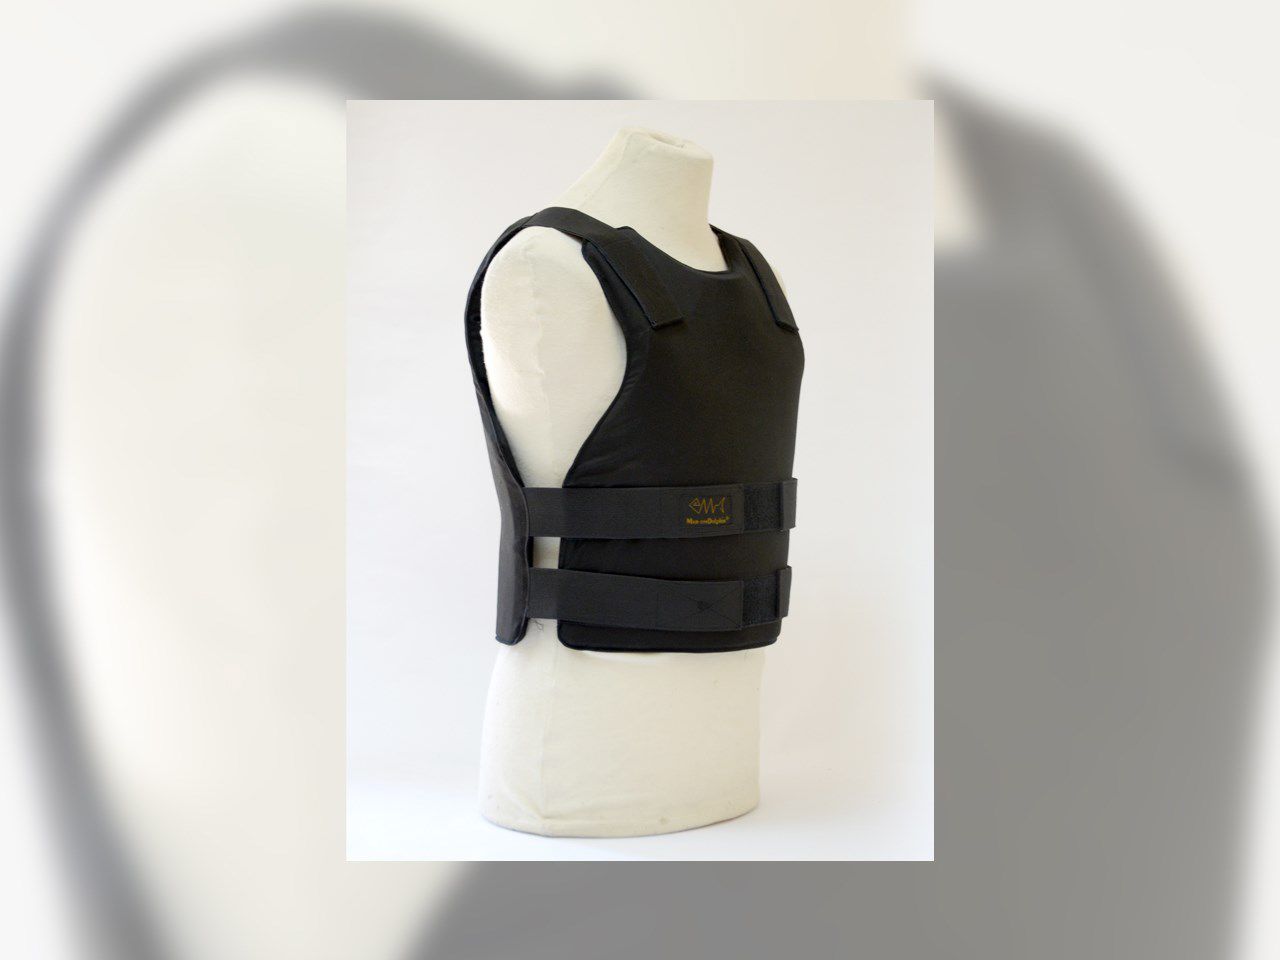 Siege gips prøve Ohio agent files complaint over expired bulletproof vests